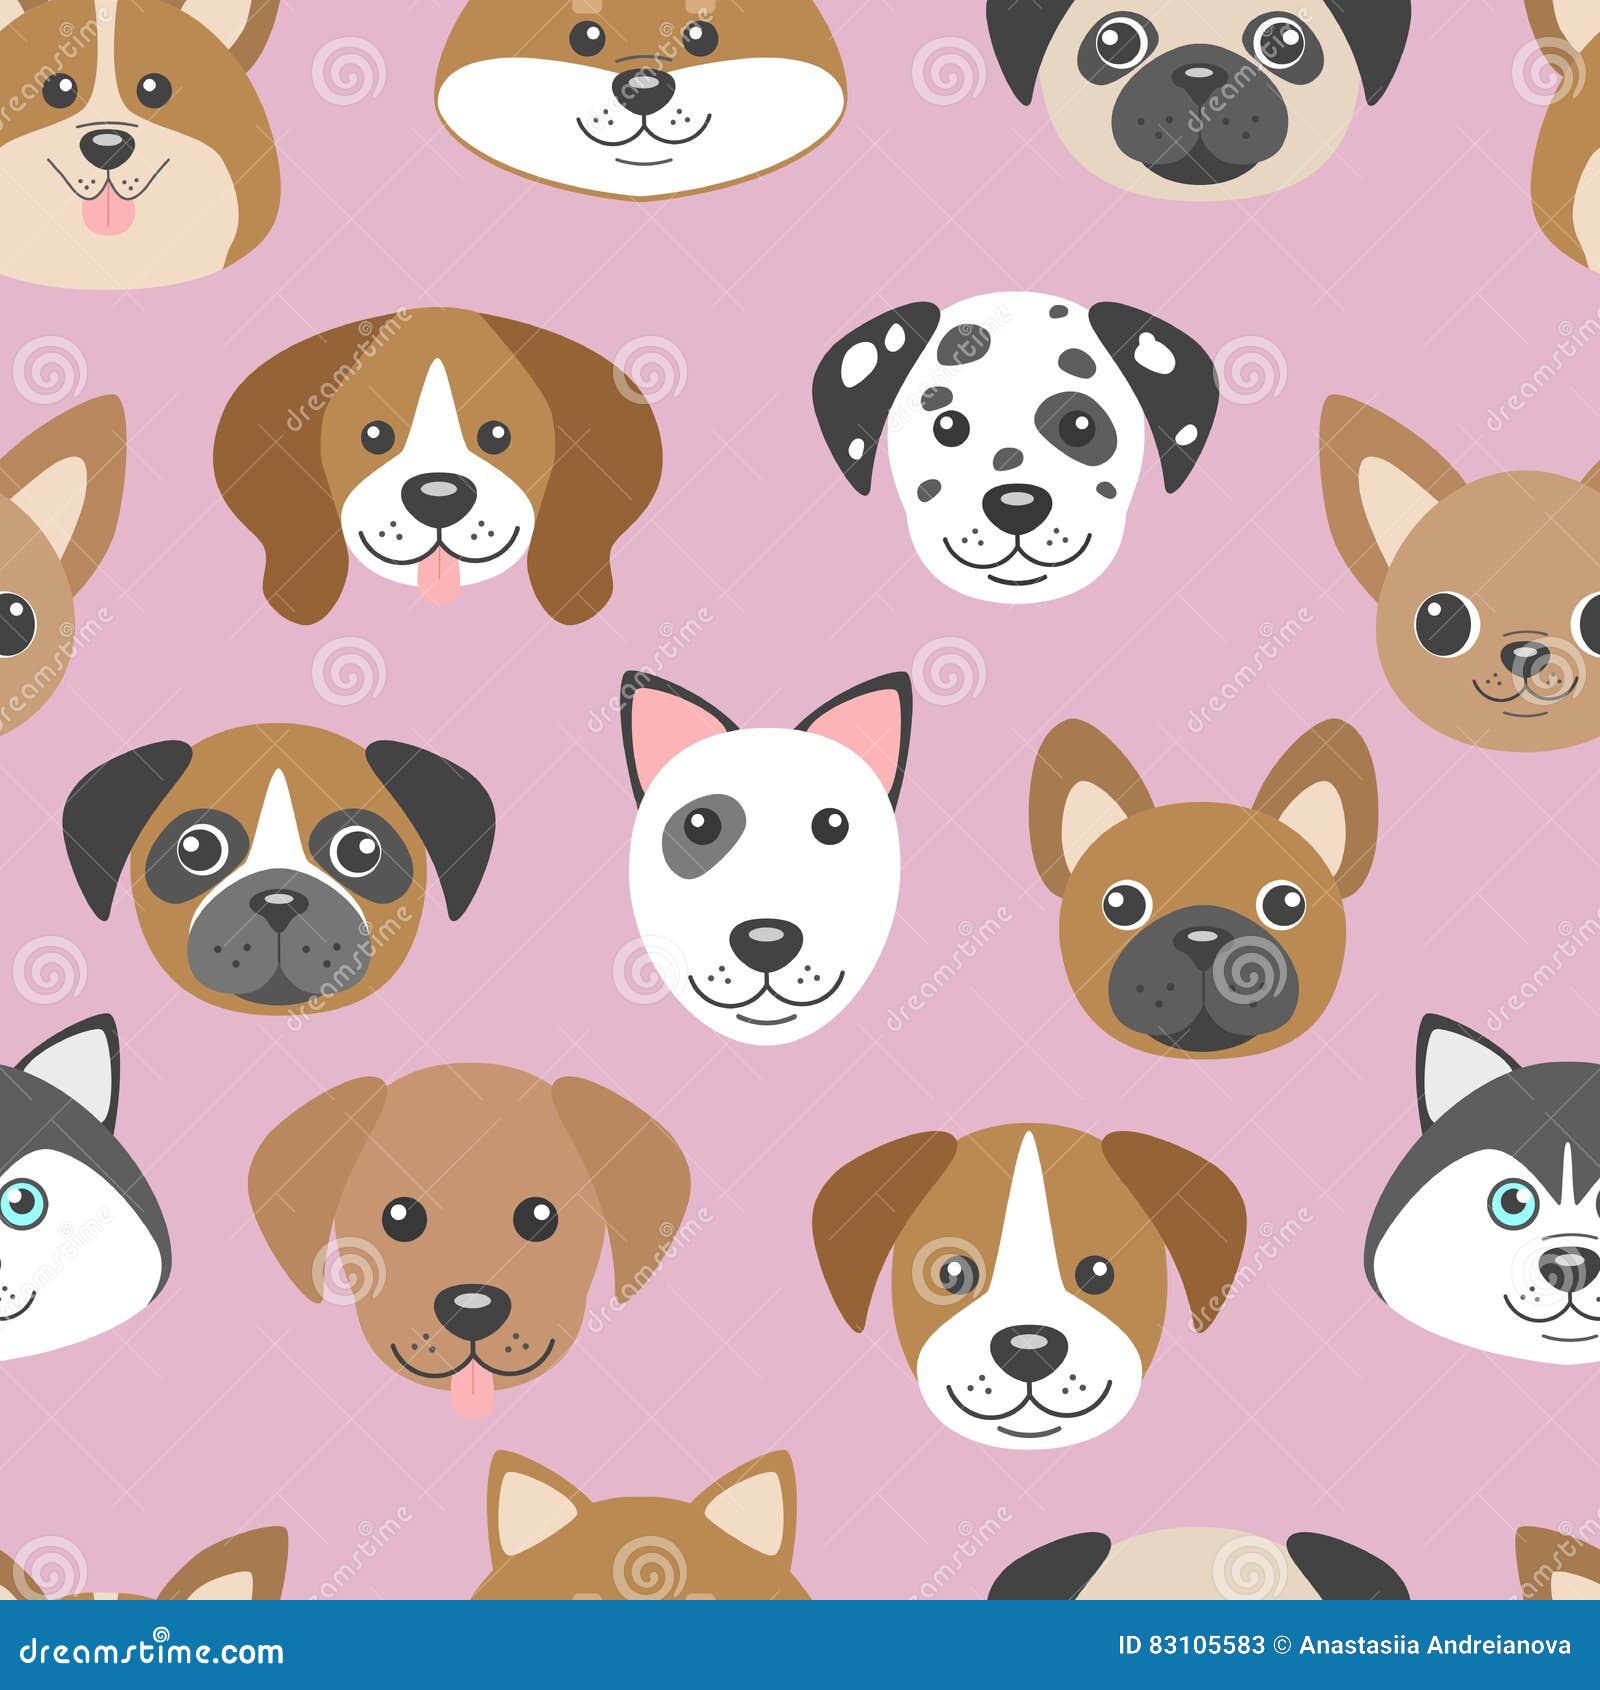 Premium Vector  Cute cartoon dog faces with bones seamless pattern  wallpaper